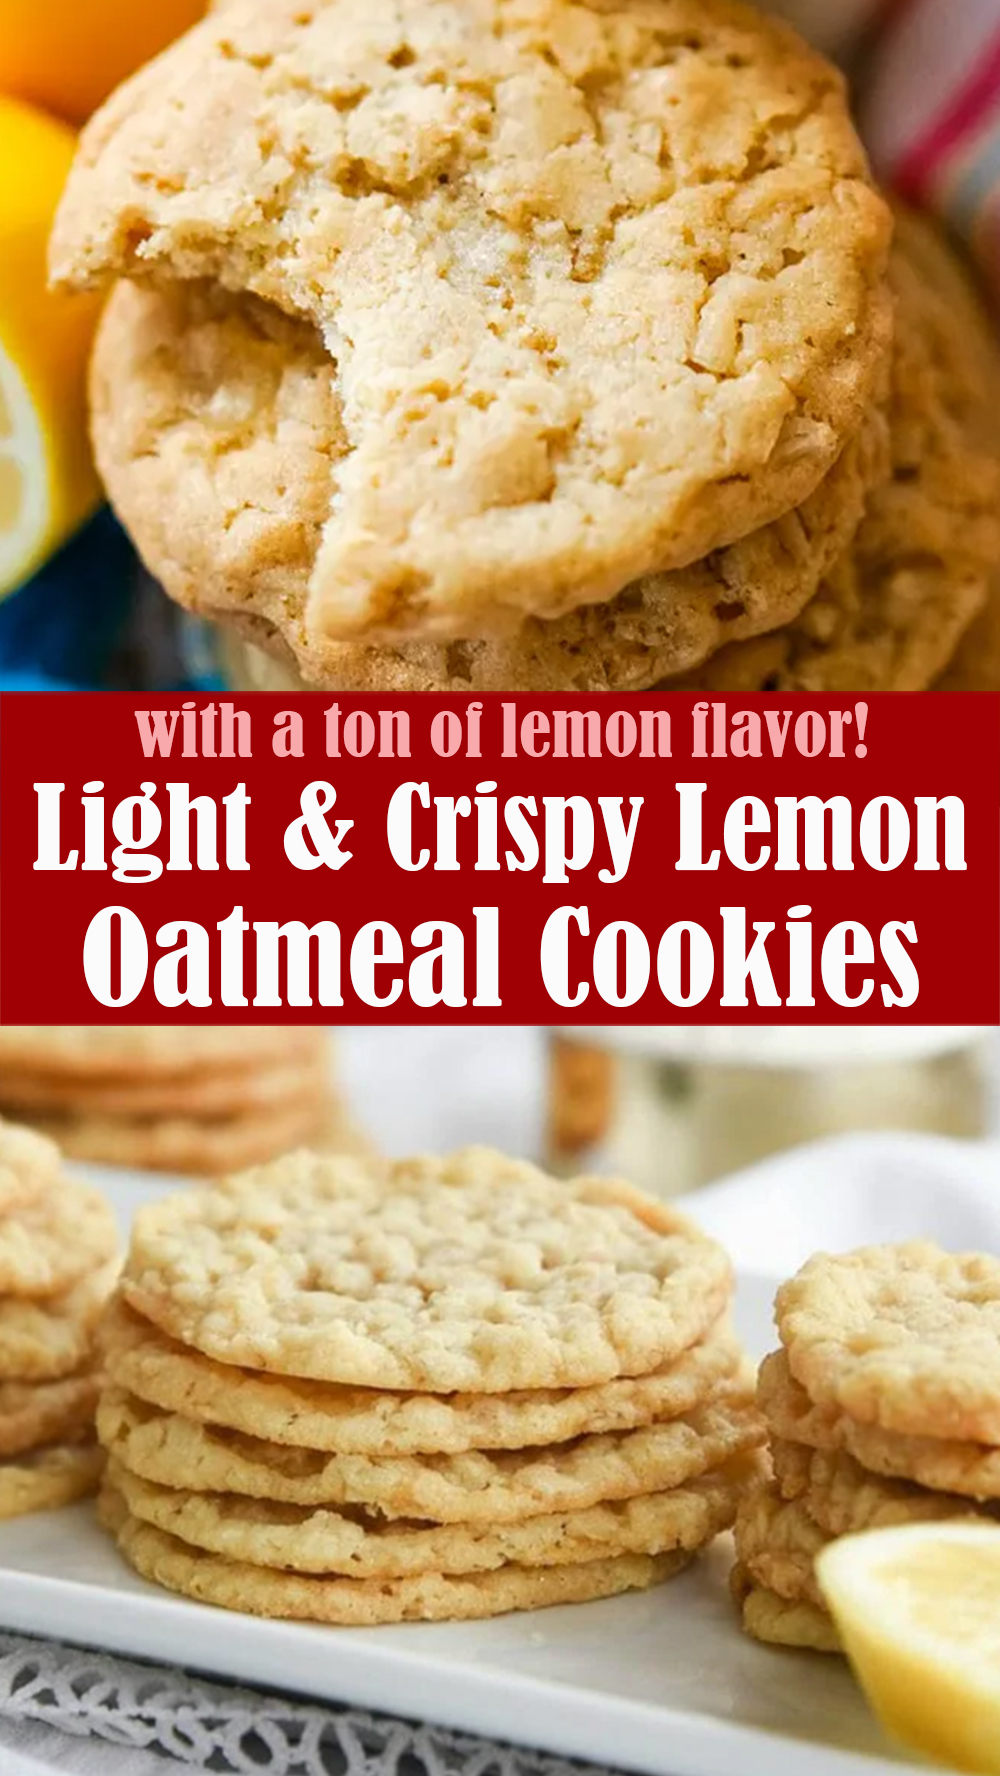 Light and Crispy Lemon Oatmeal Cookies